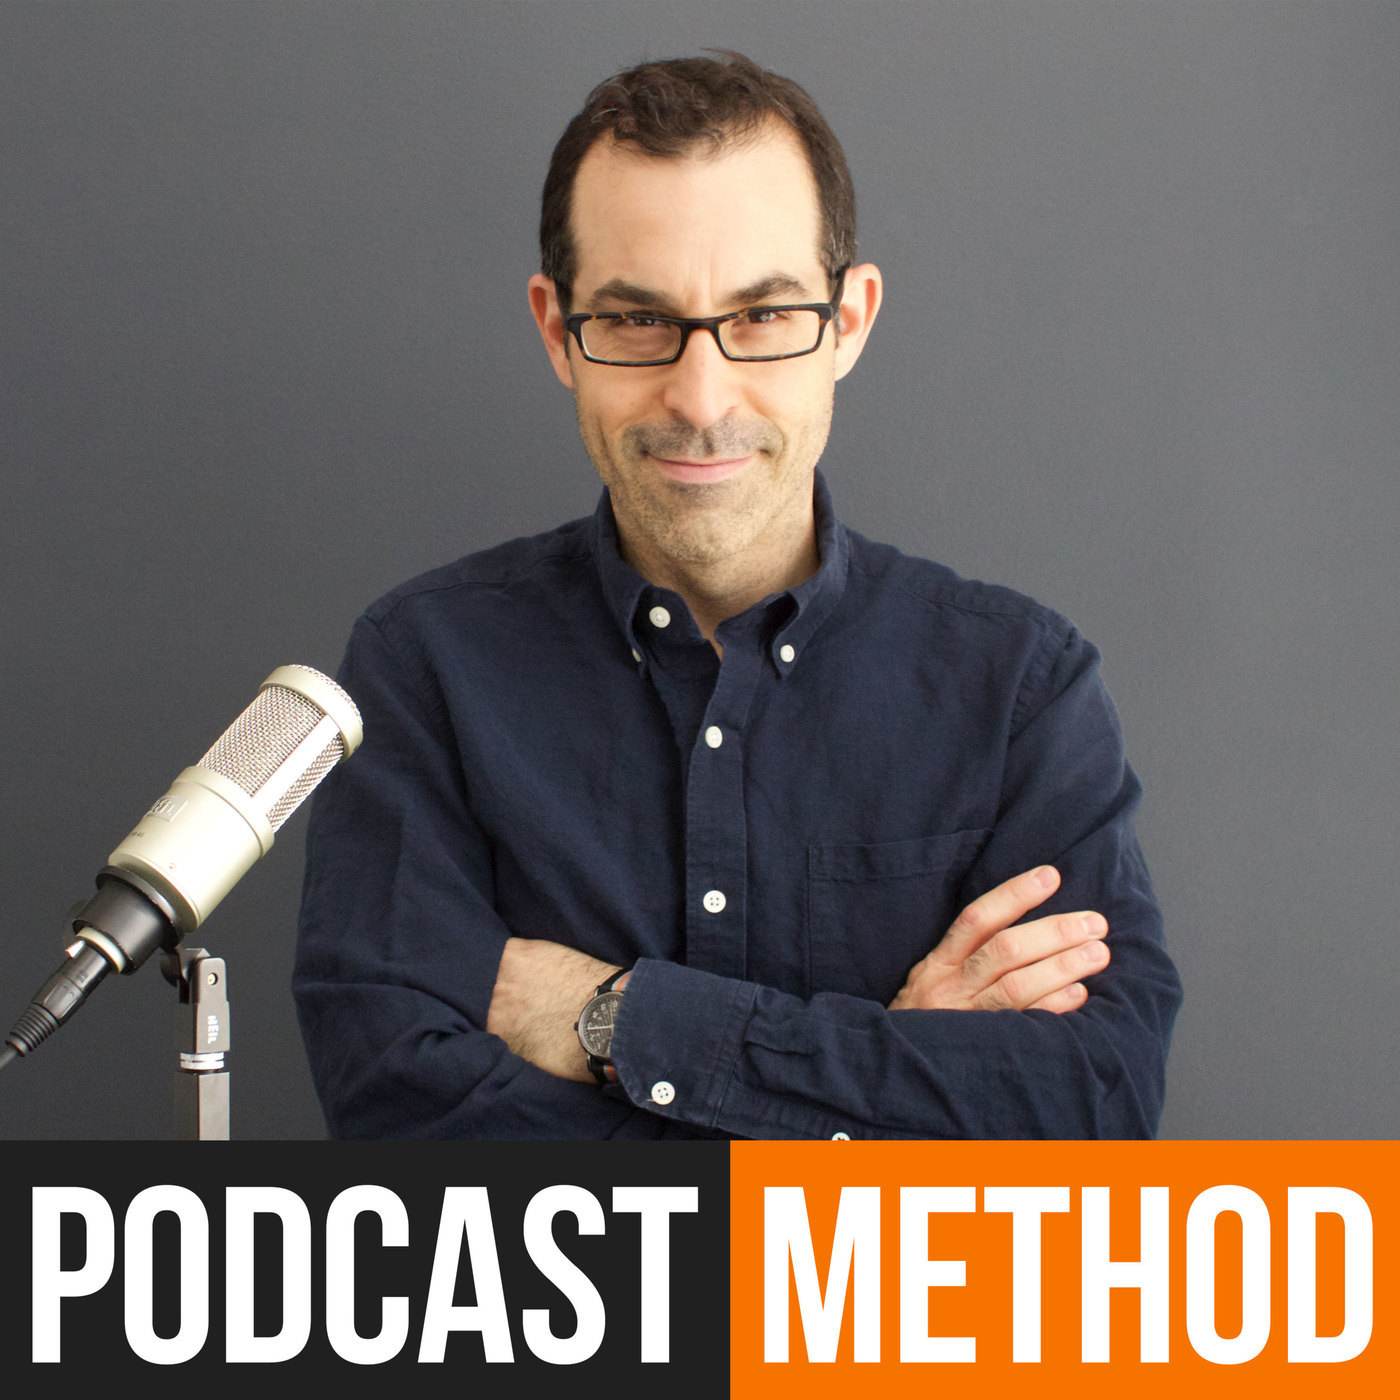 Podcast Method